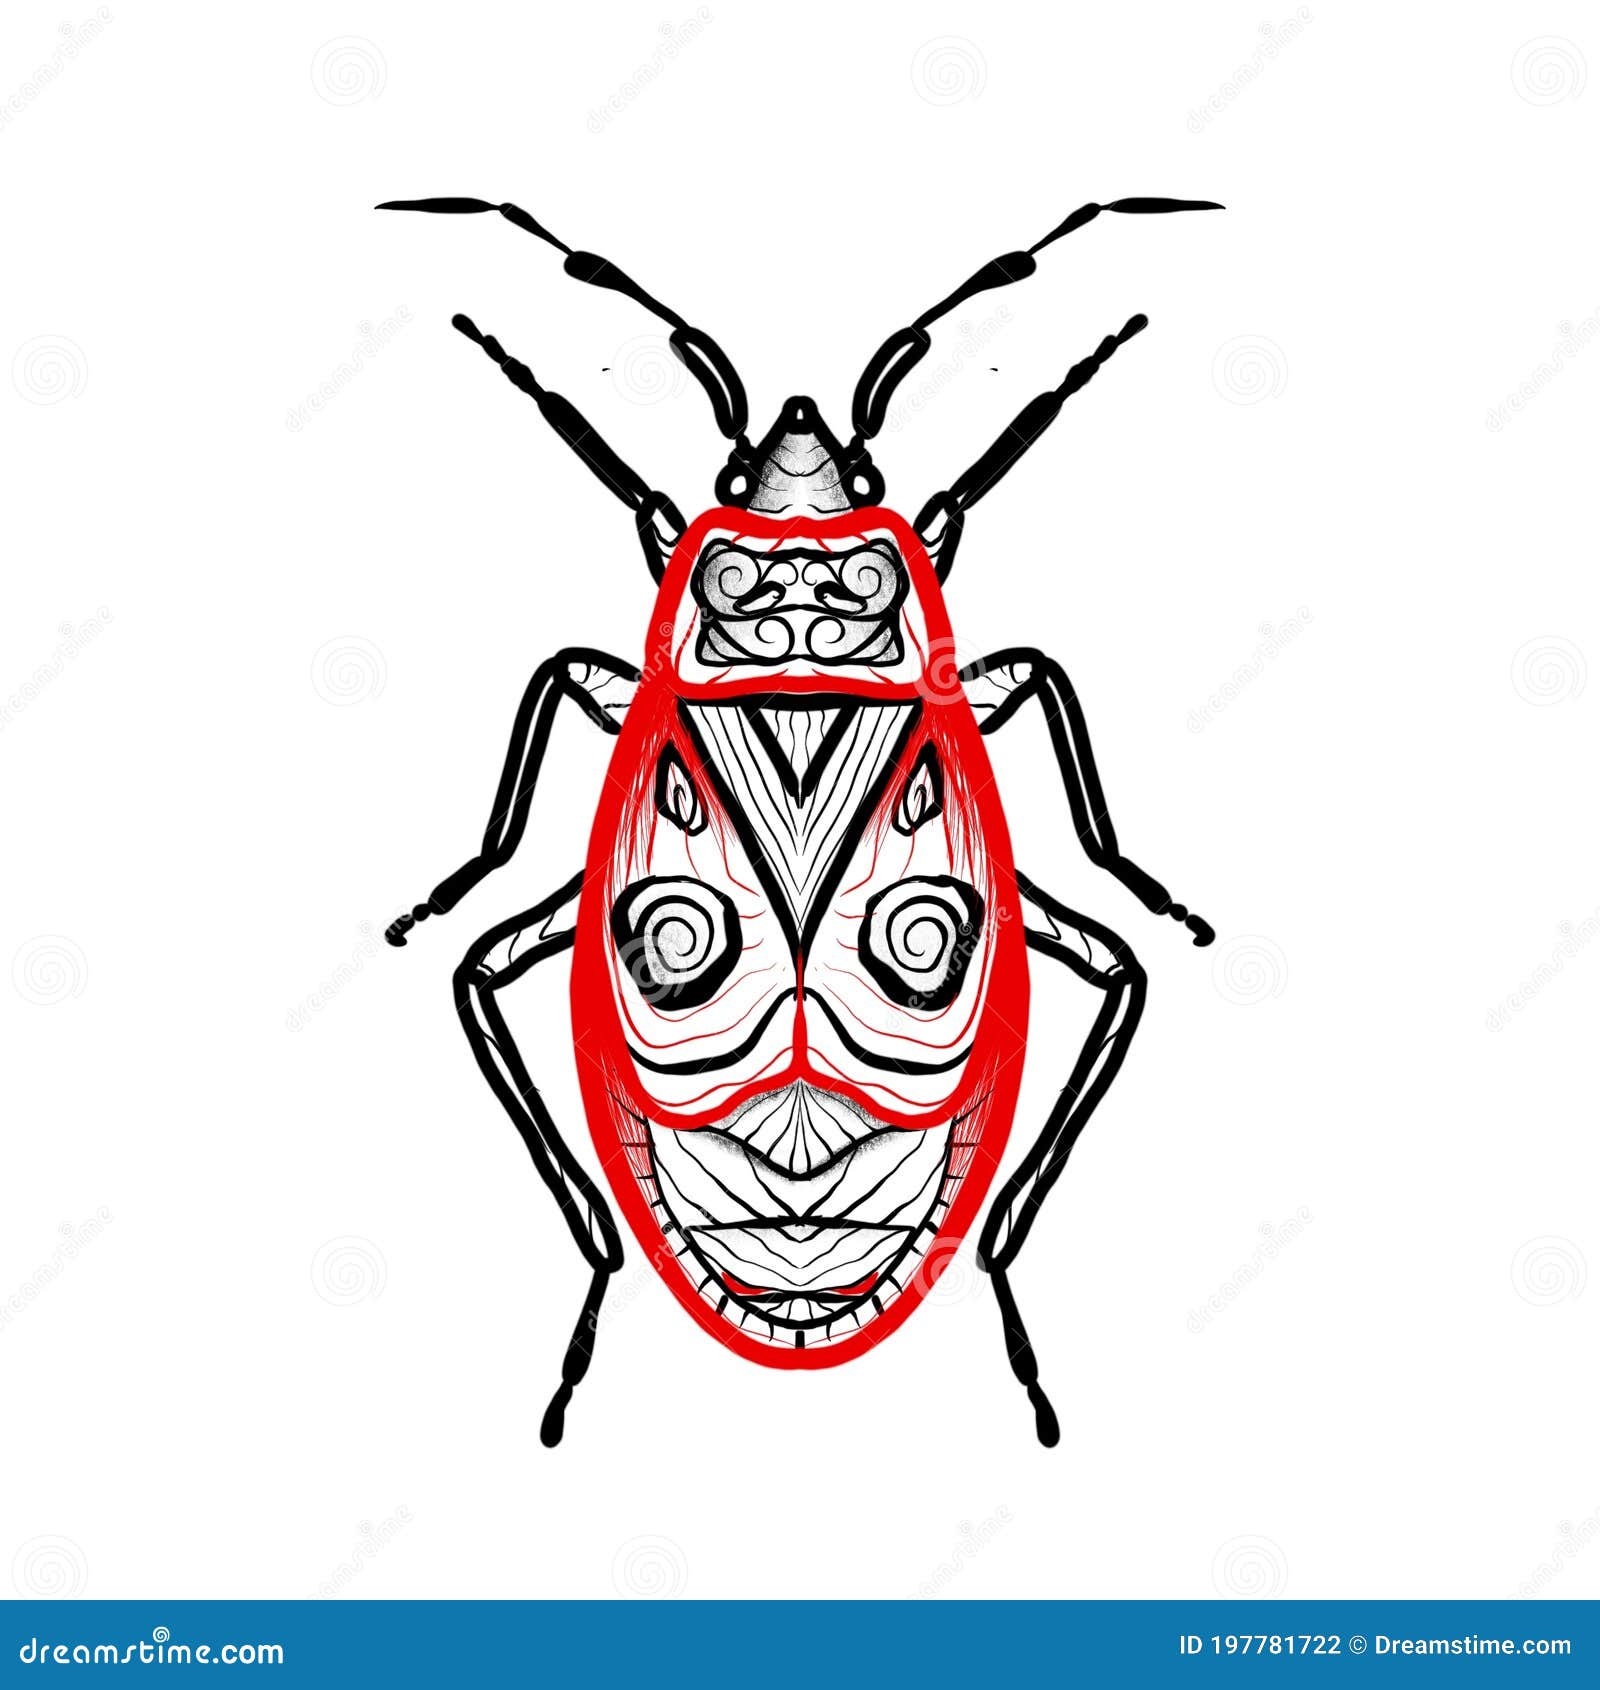 8064 Beetle Tattoo Images Stock Photos  Vectors  Shutterstock